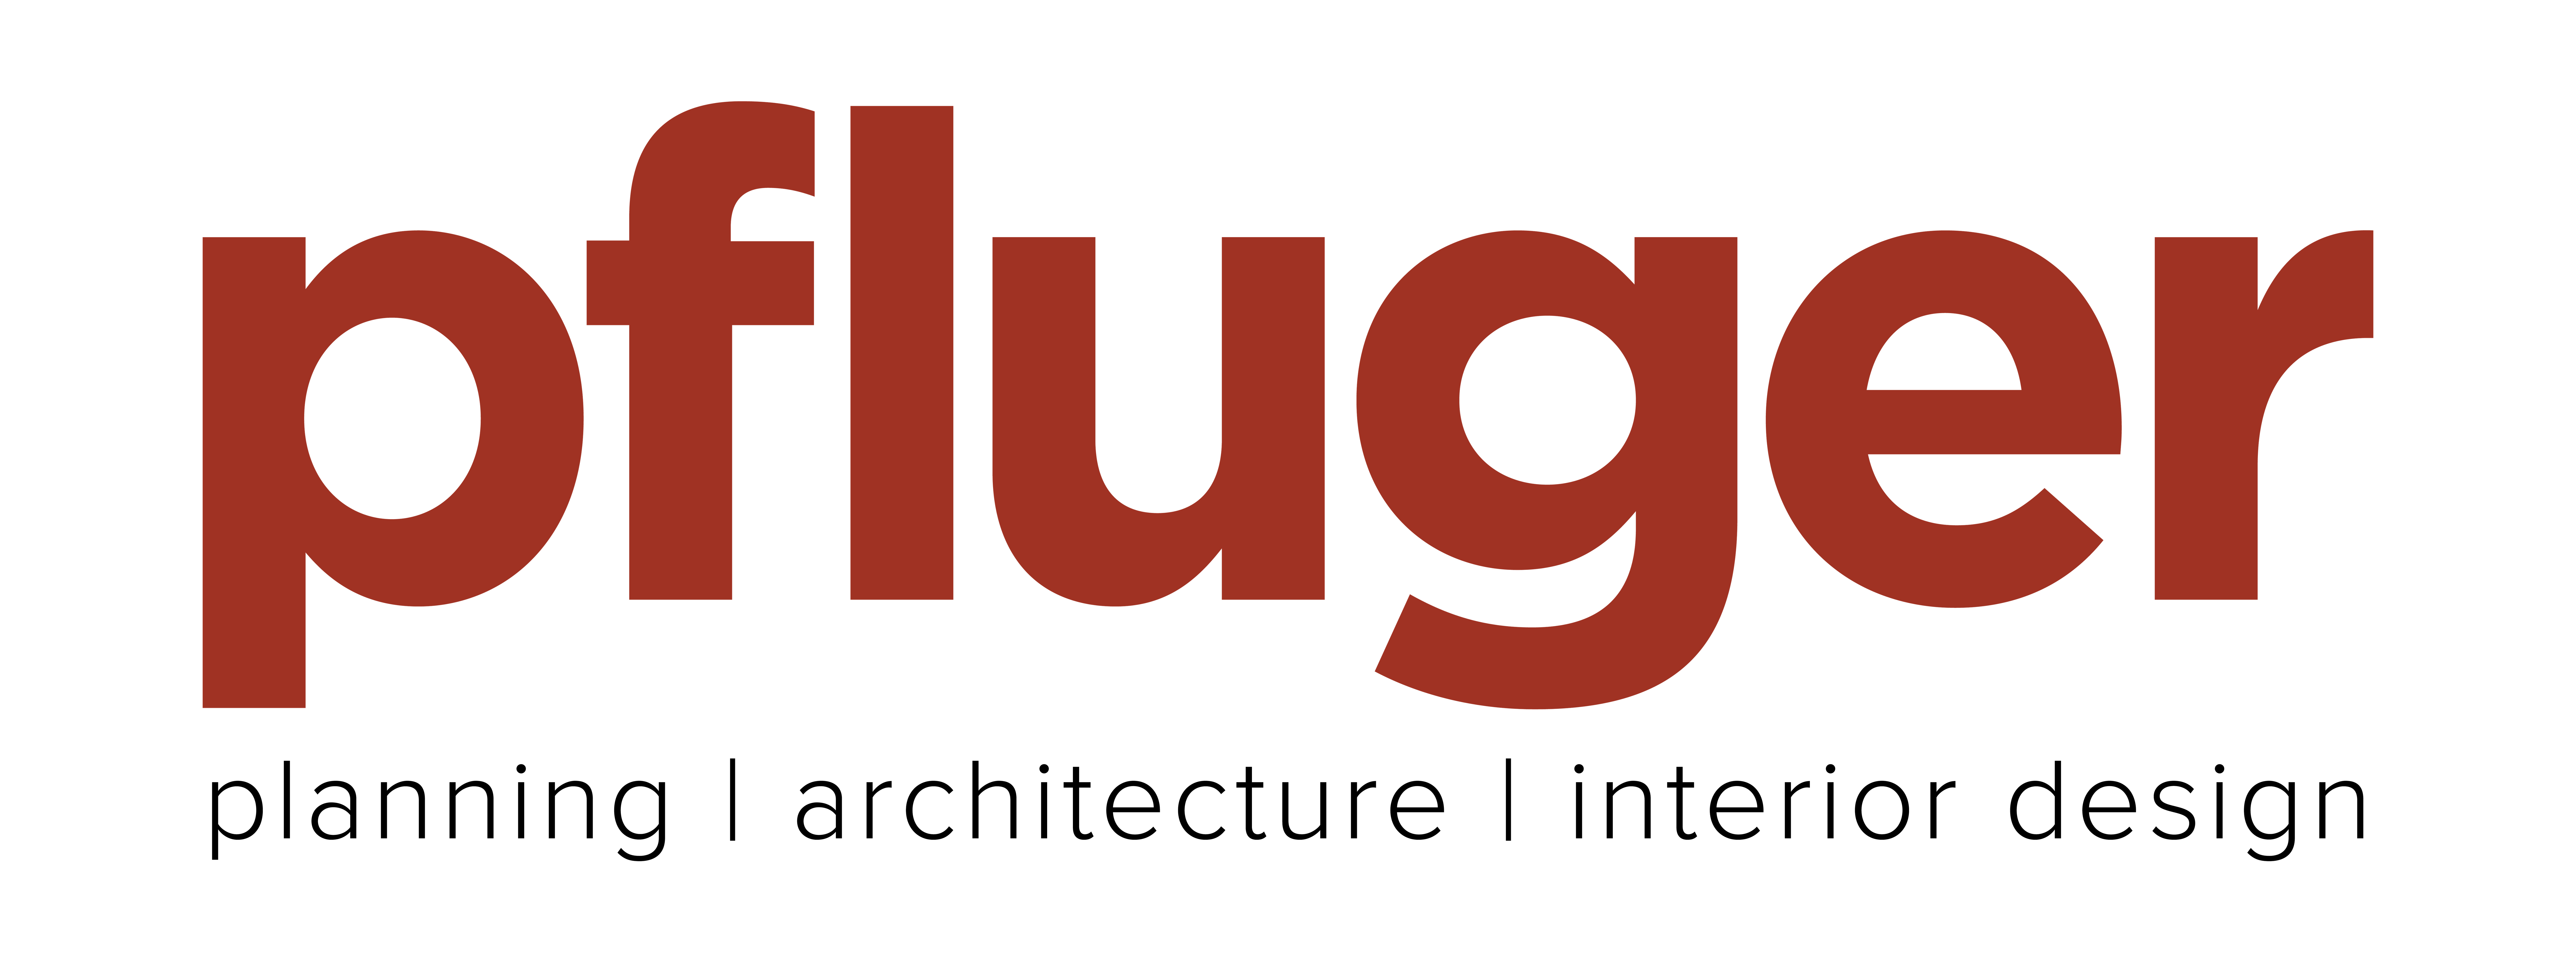 Pfluger Architects logo.